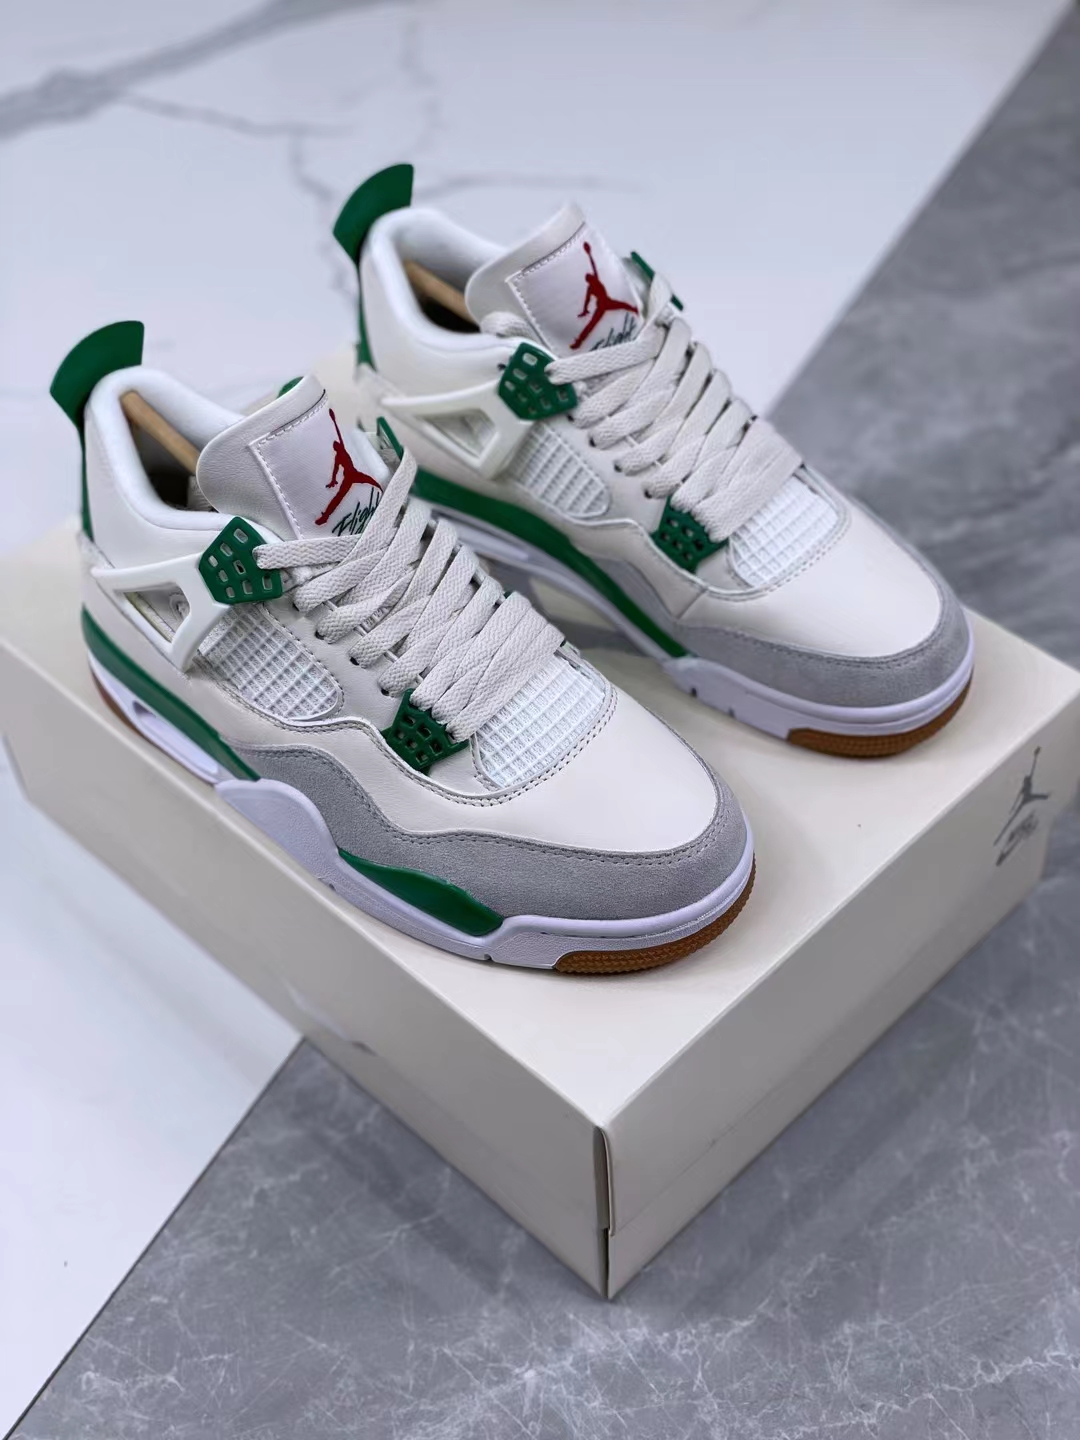 Men's Running weapon Air Jordan 4 Shoes Green/White 0139